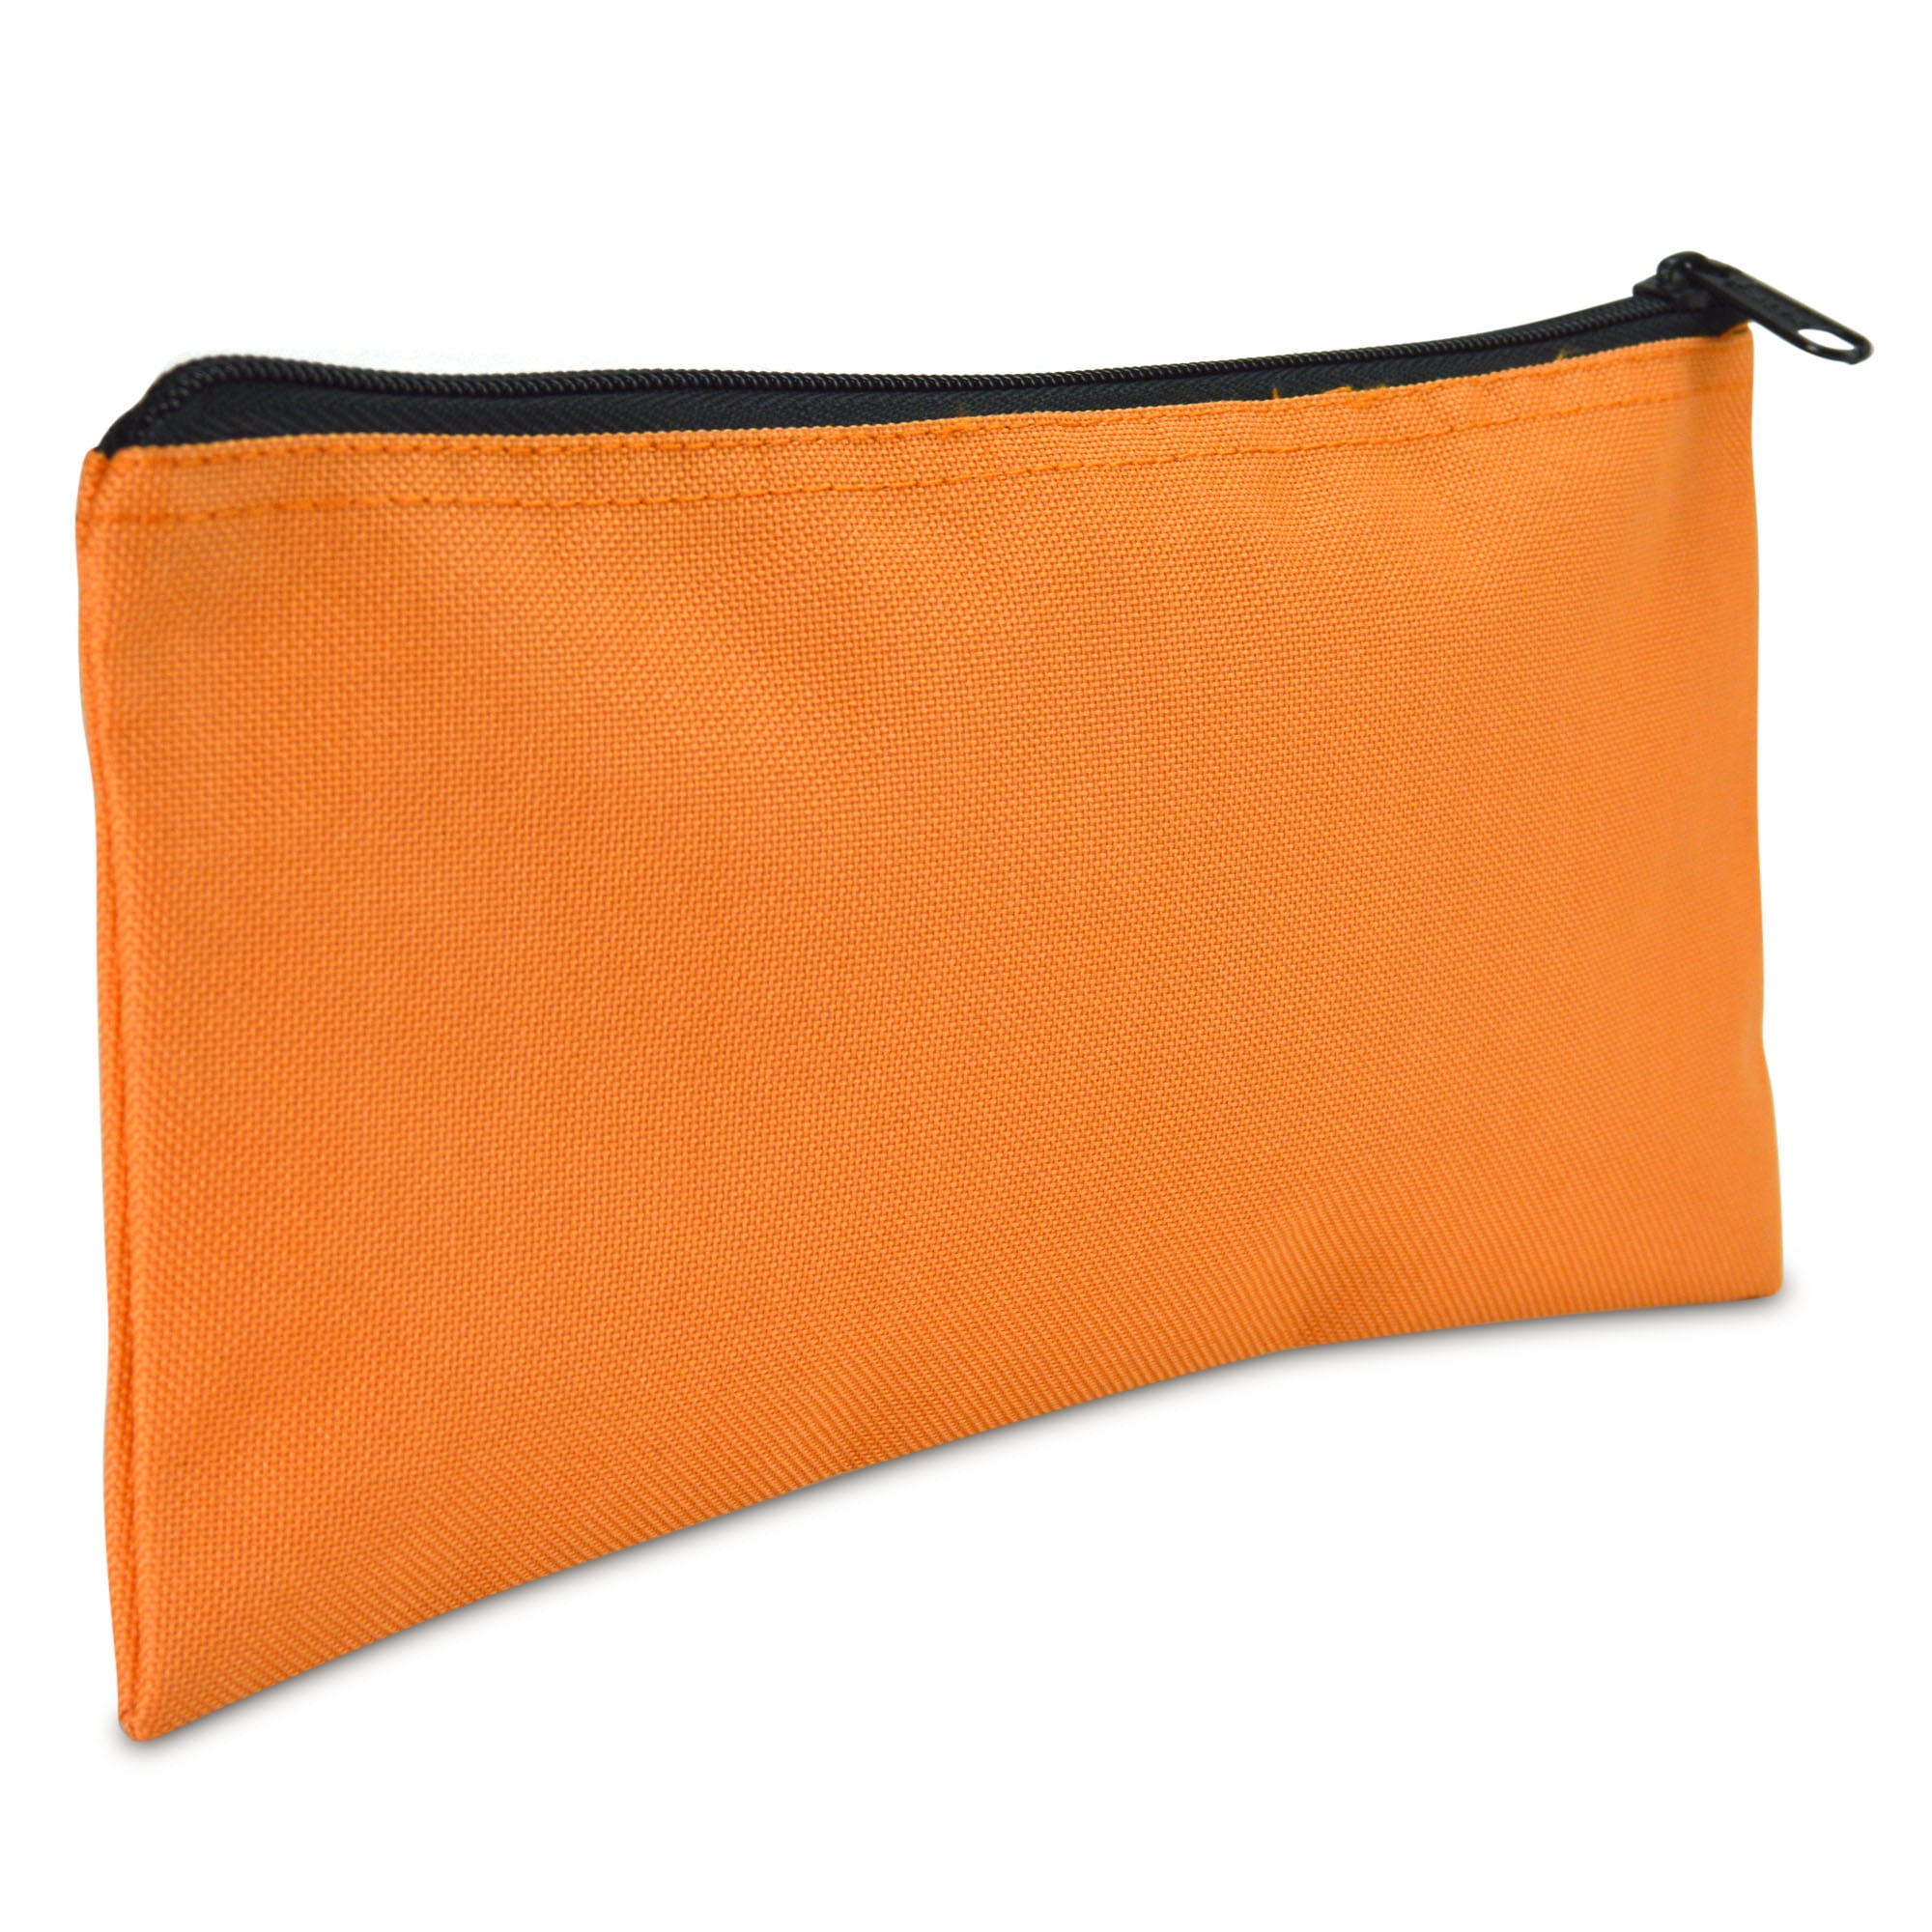 DALIX Bank Bags Money Pouch Security Deposit Utility Zipper Coin Bag in Orange - www.strongerinc.org